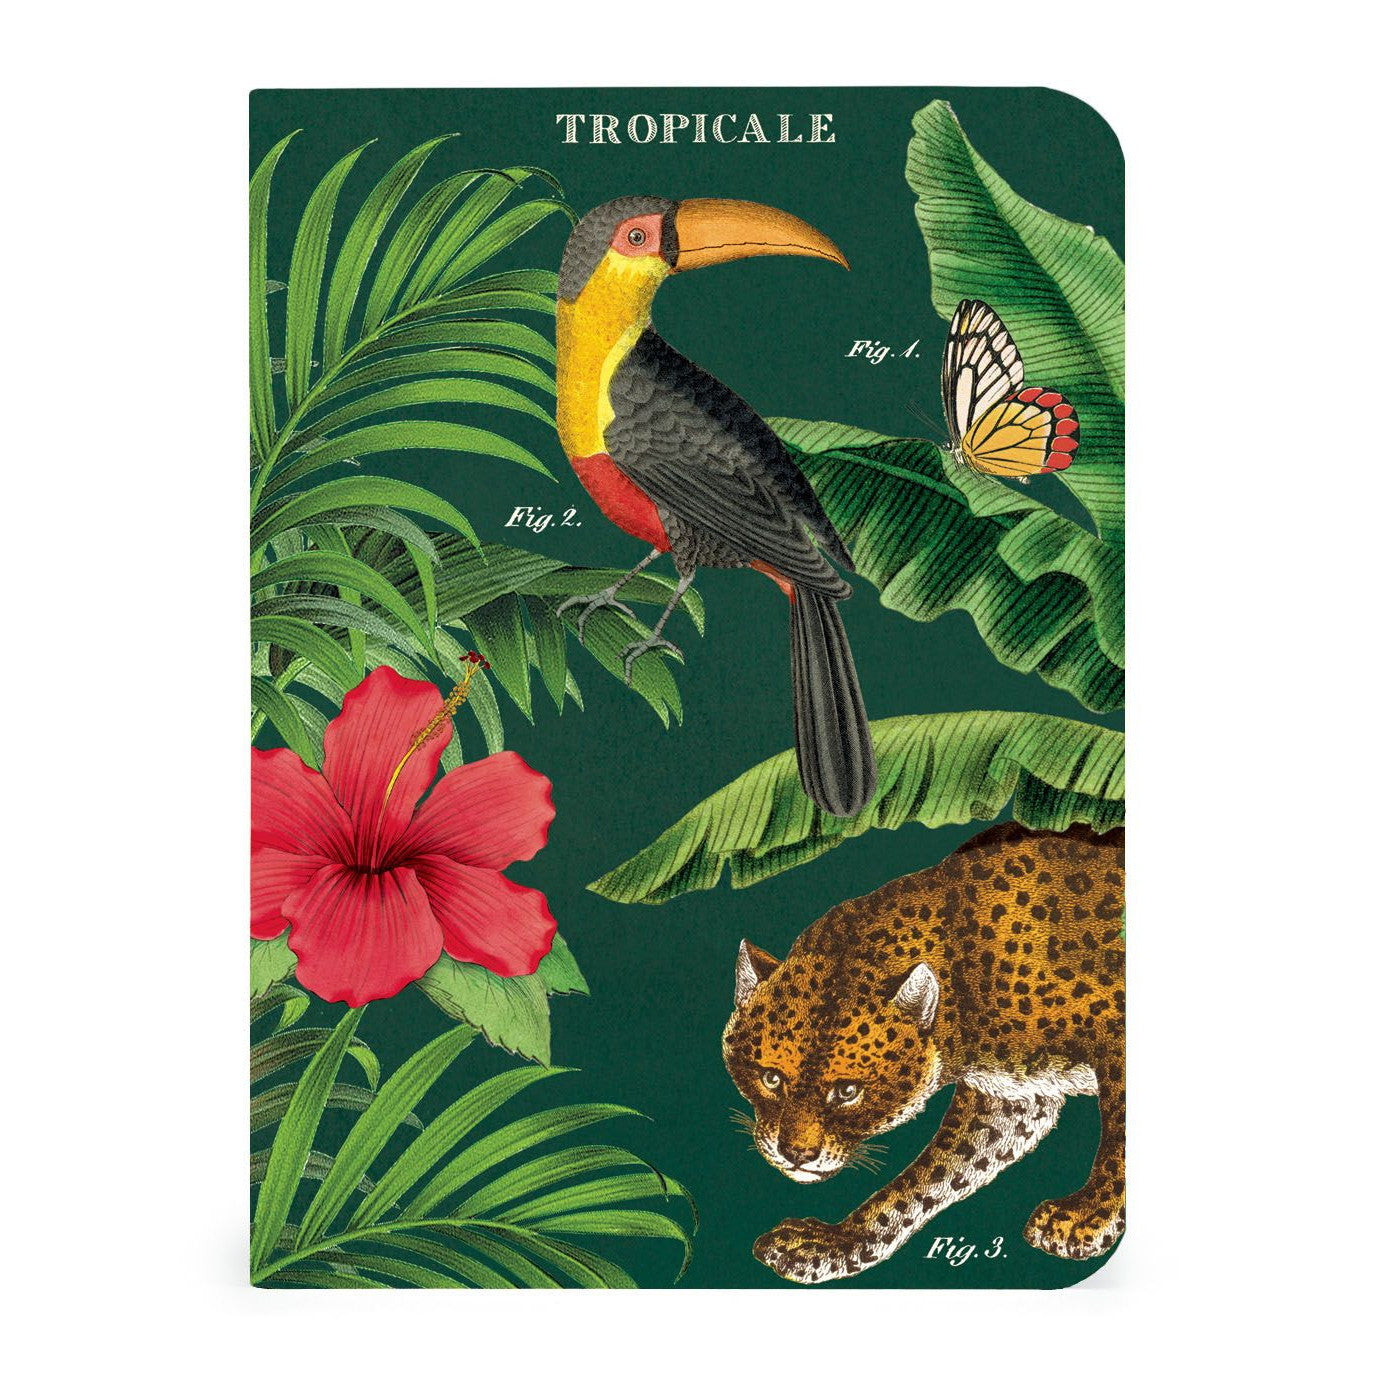 Cavallini & Co. 3 Mini Notebooks - Tropicale